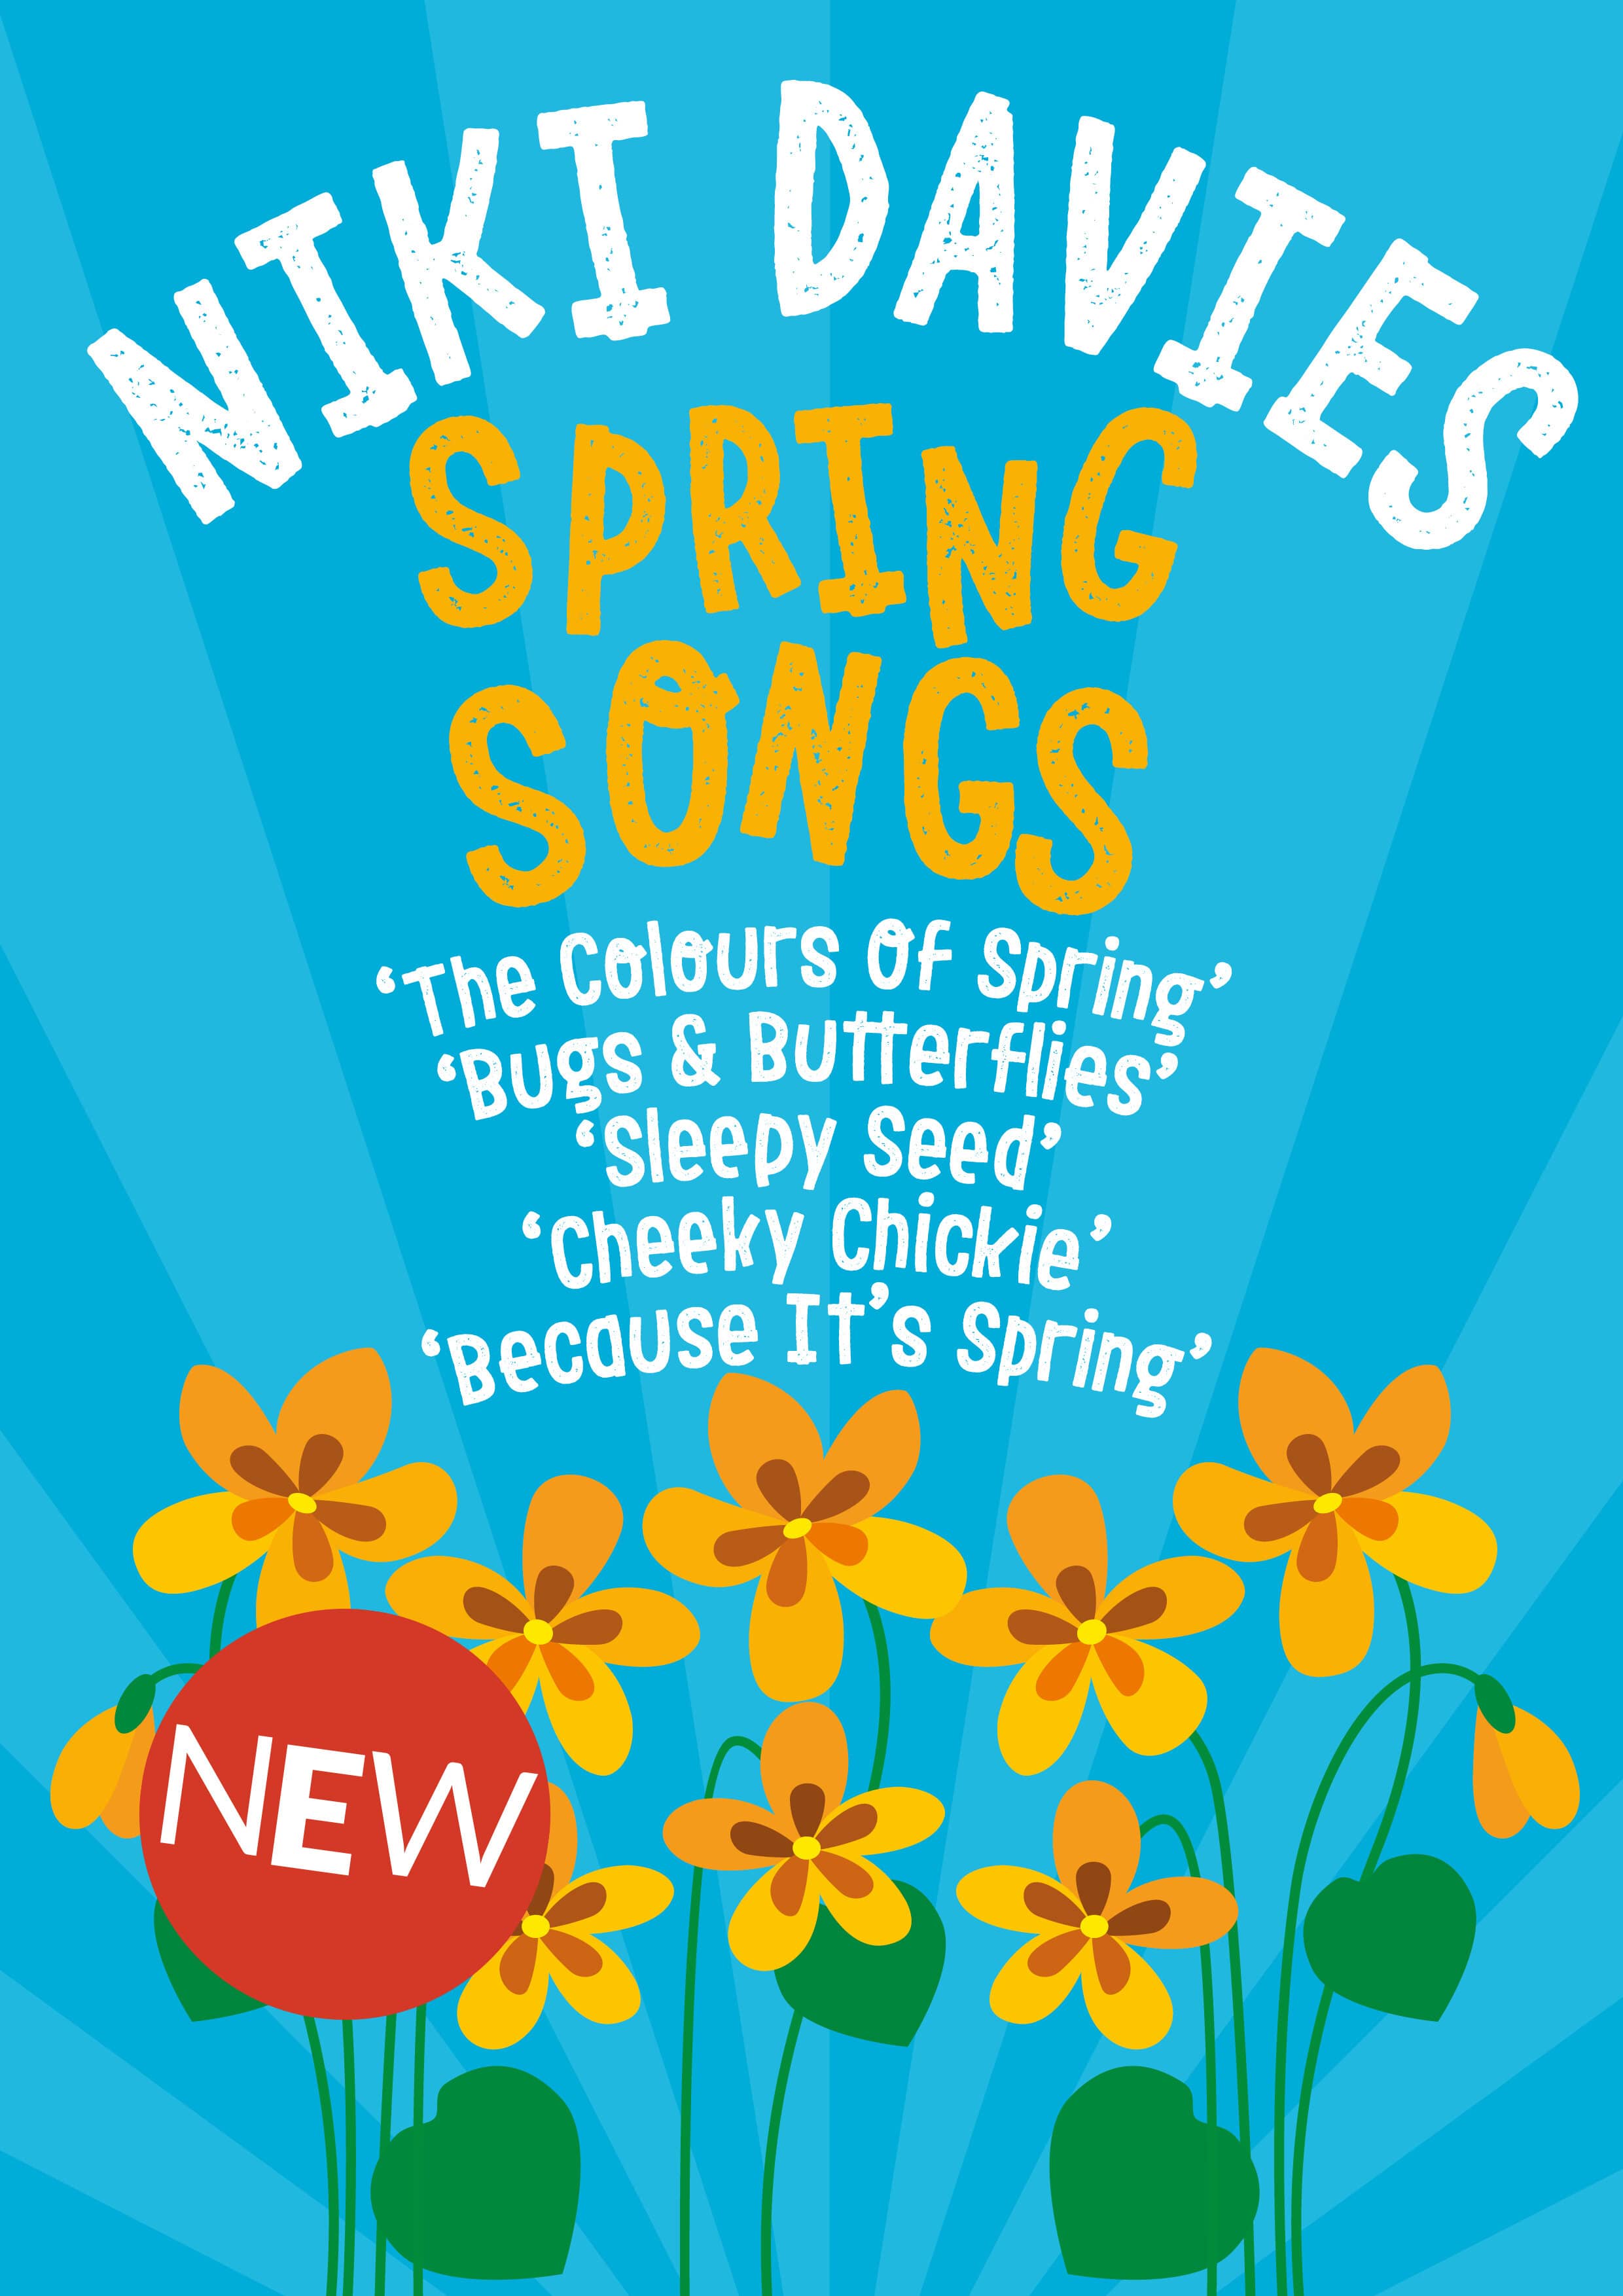 Niki Davies Spring Songs - 100% Discount With Code SPRINGND1